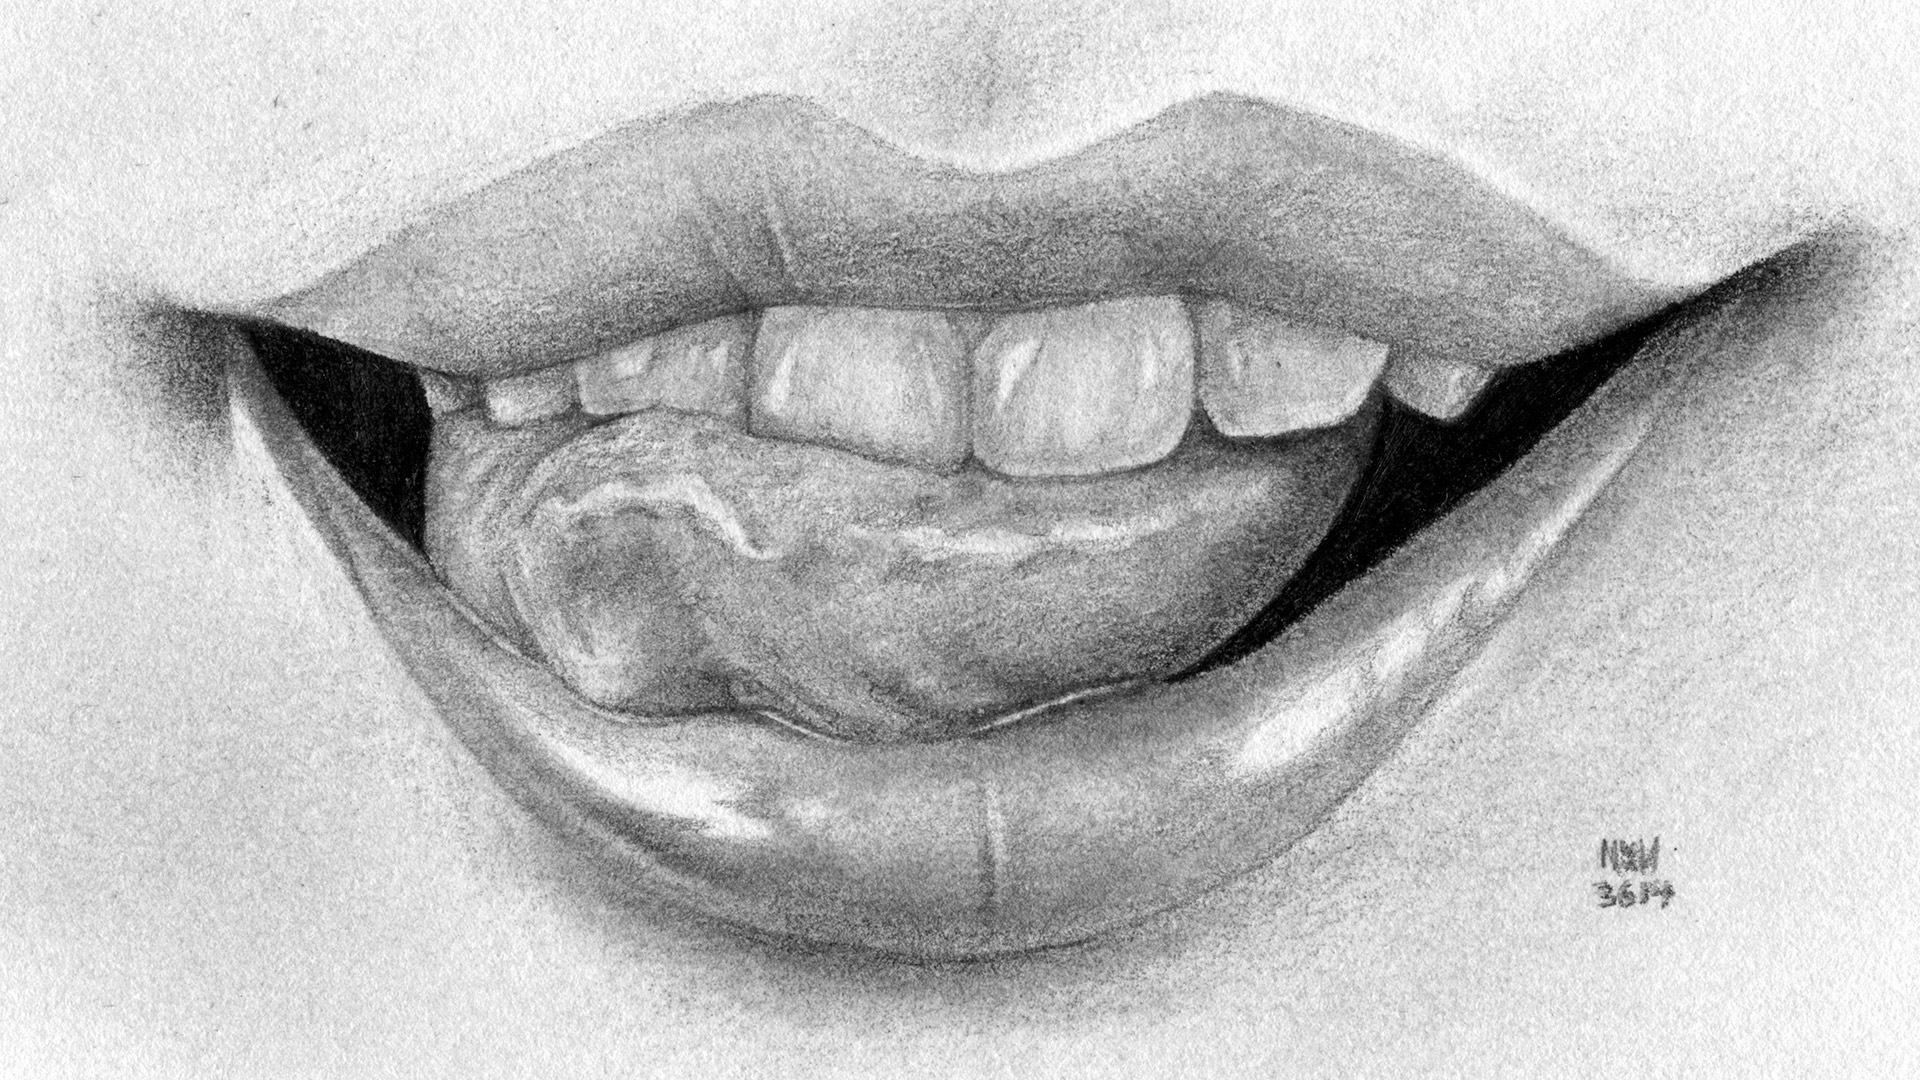 Stupell Industries Corgi Dog Lolling Tongue Graphite Pencil Sketch On Wood  by George Dyachenko Drawing Print | Wayfair